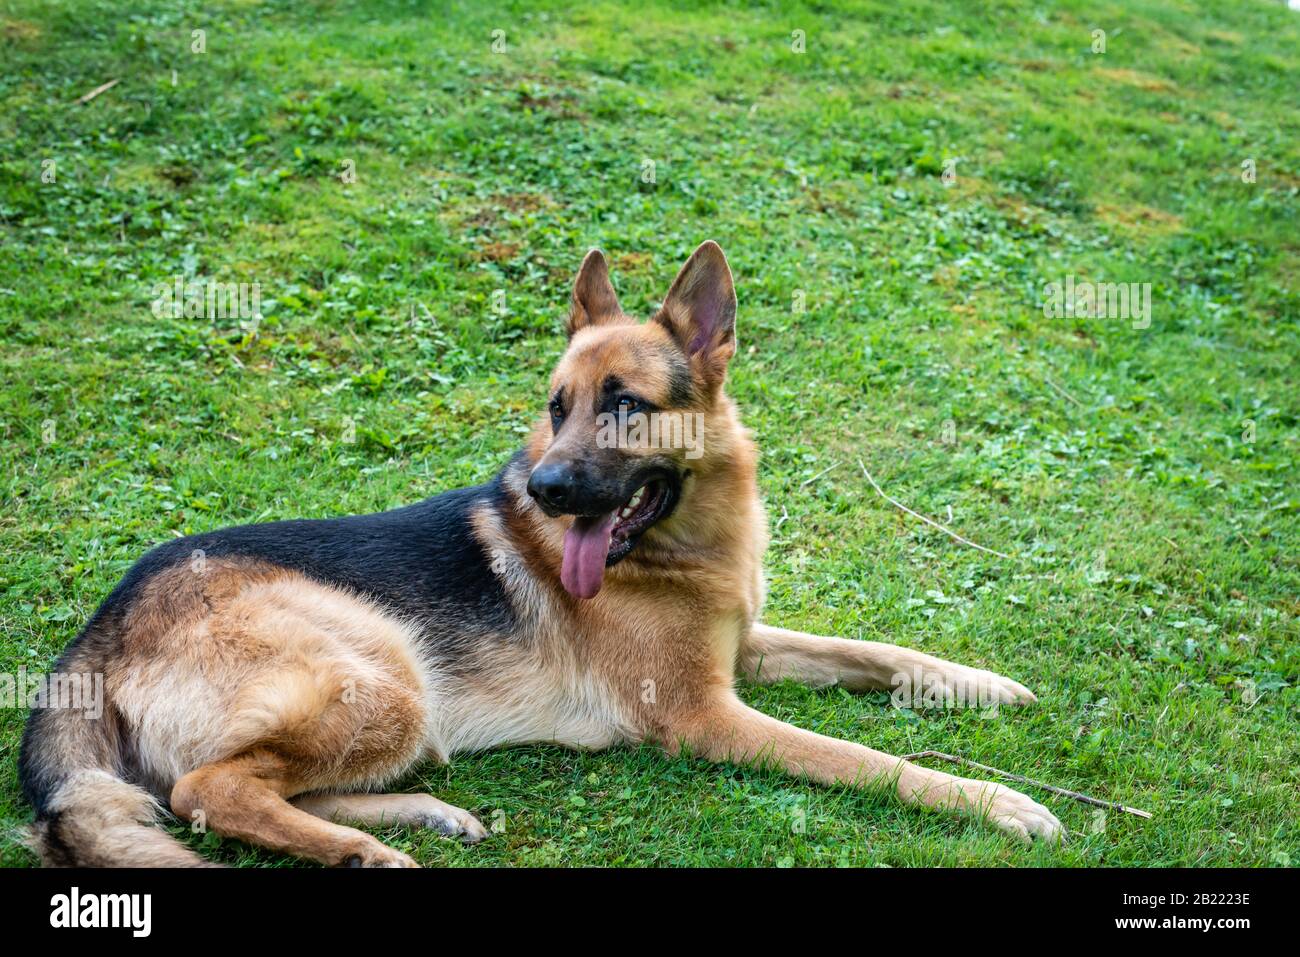 German shepherd dog, training activities Stock Photo